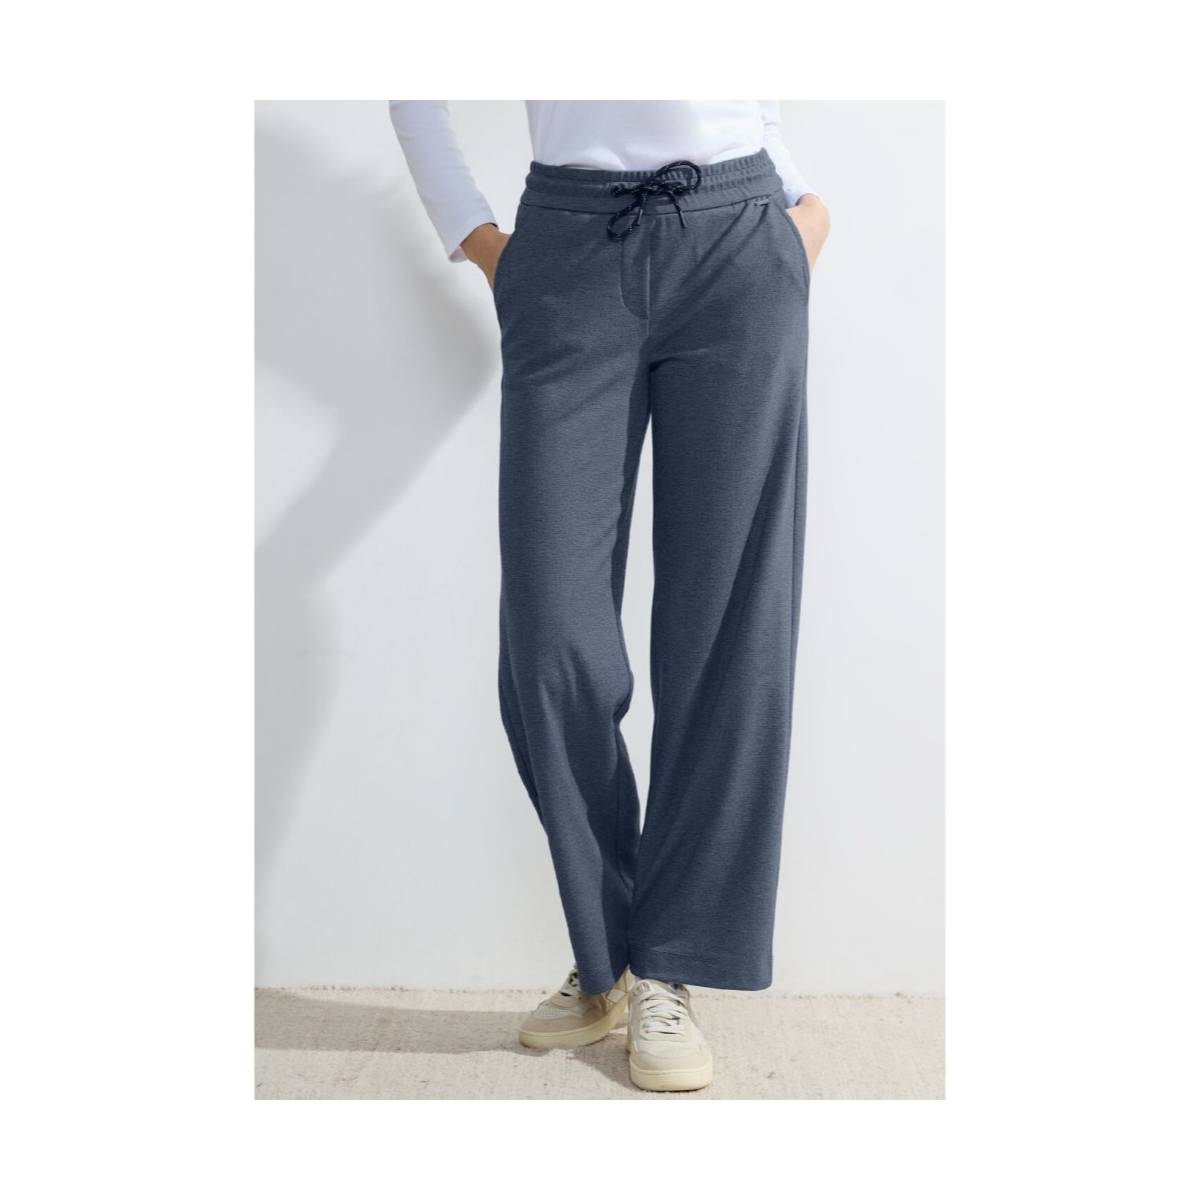 CECIL  broeken donkere jeans/color -  model b377372 - Dameskleding broeken jeans